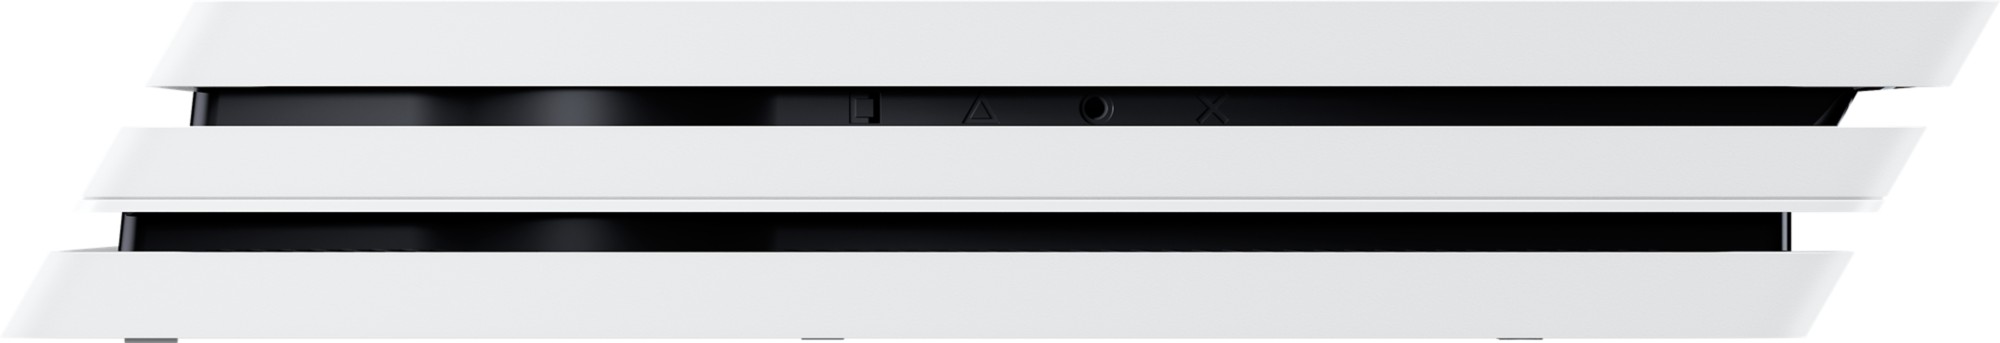 PlayStation 4 Pro (500GB, Glacier White)